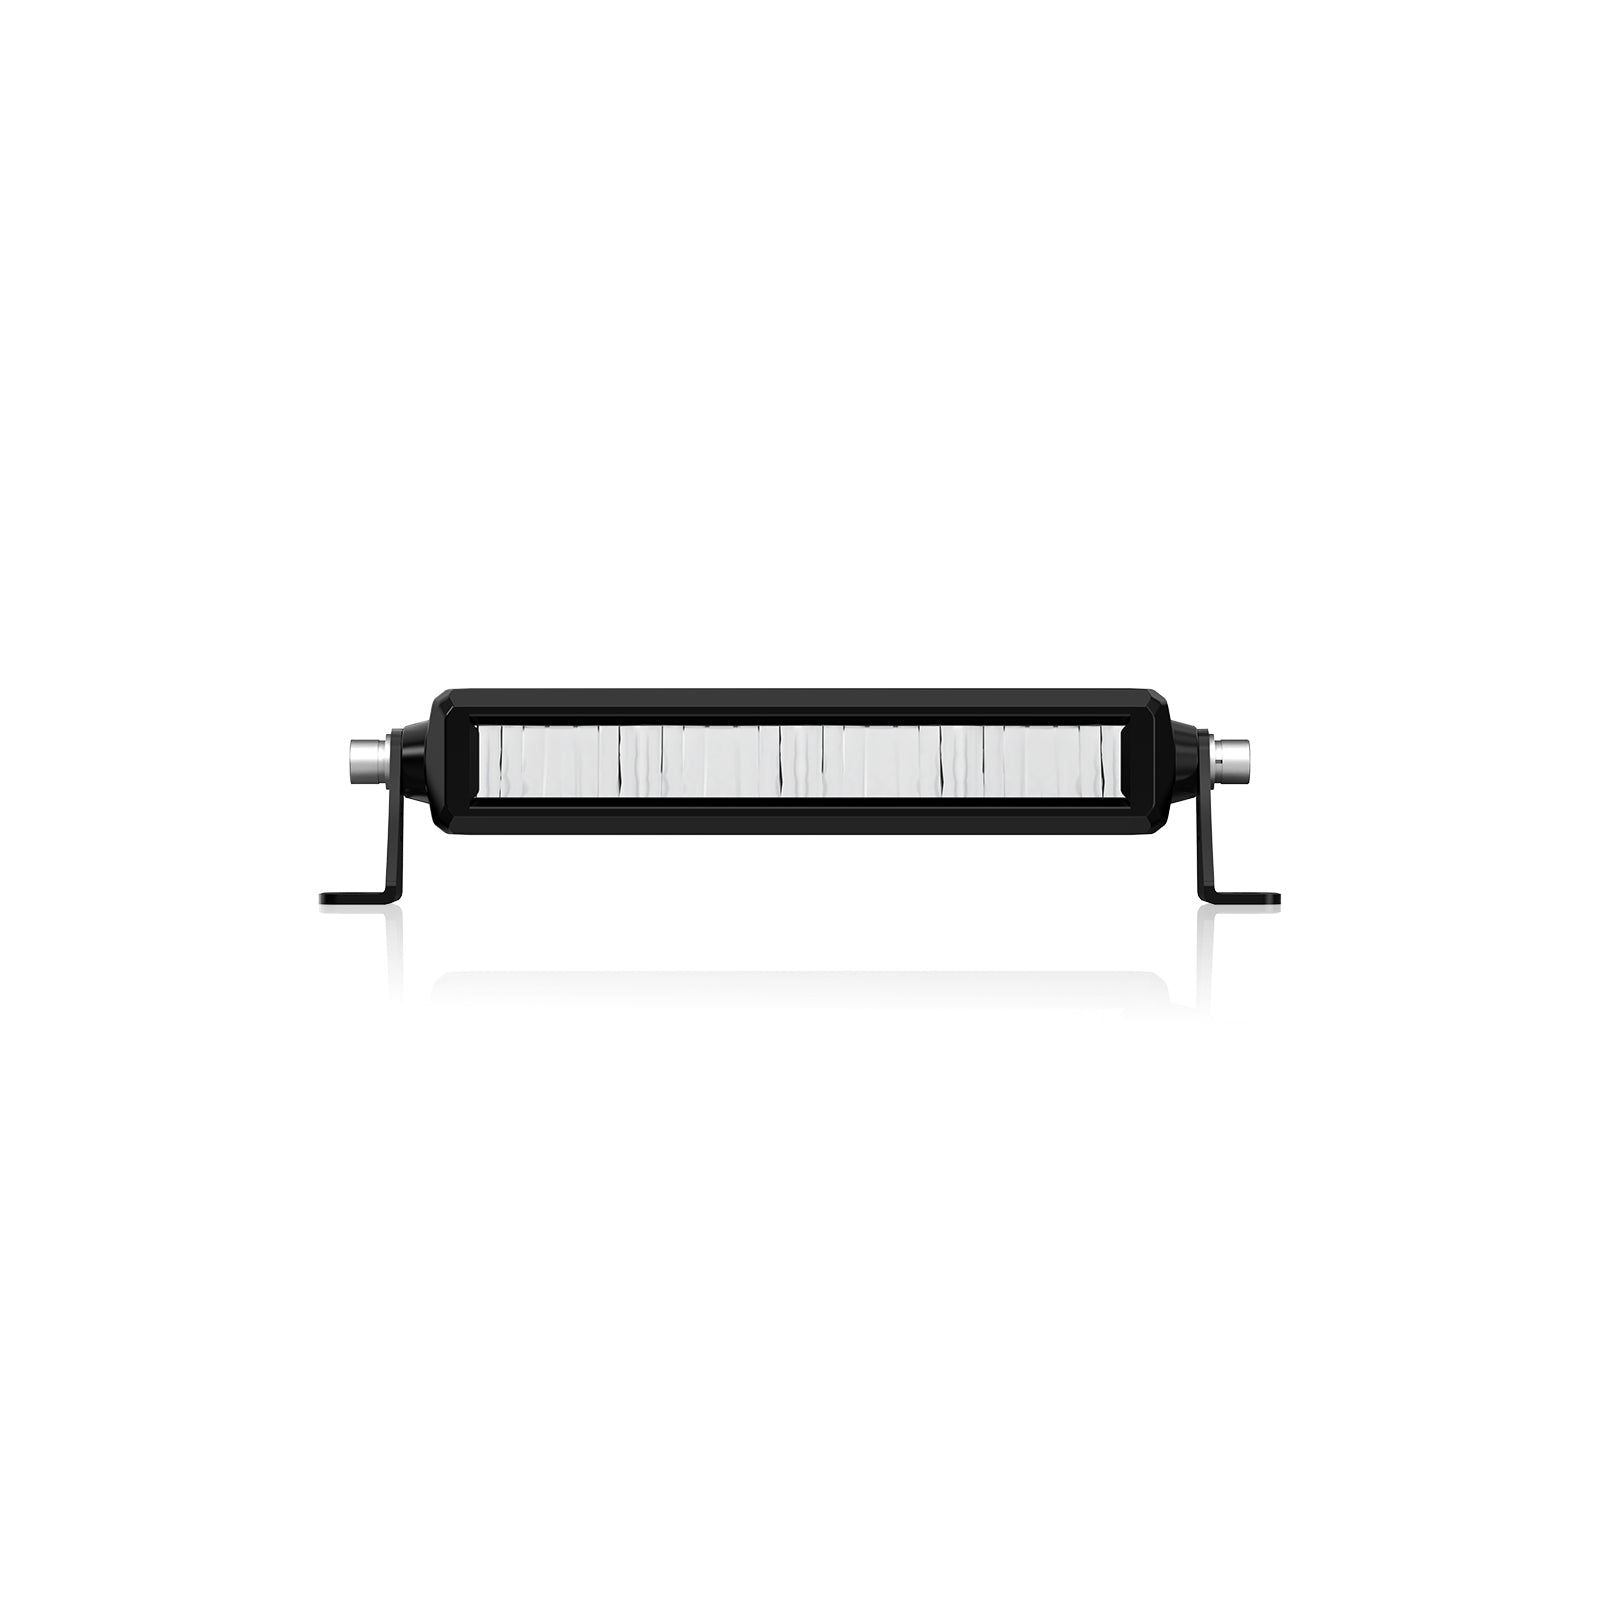 Off Road LED Light Bar 10 Inch Single Row Dual Beam White Amber - NOVSIGHT